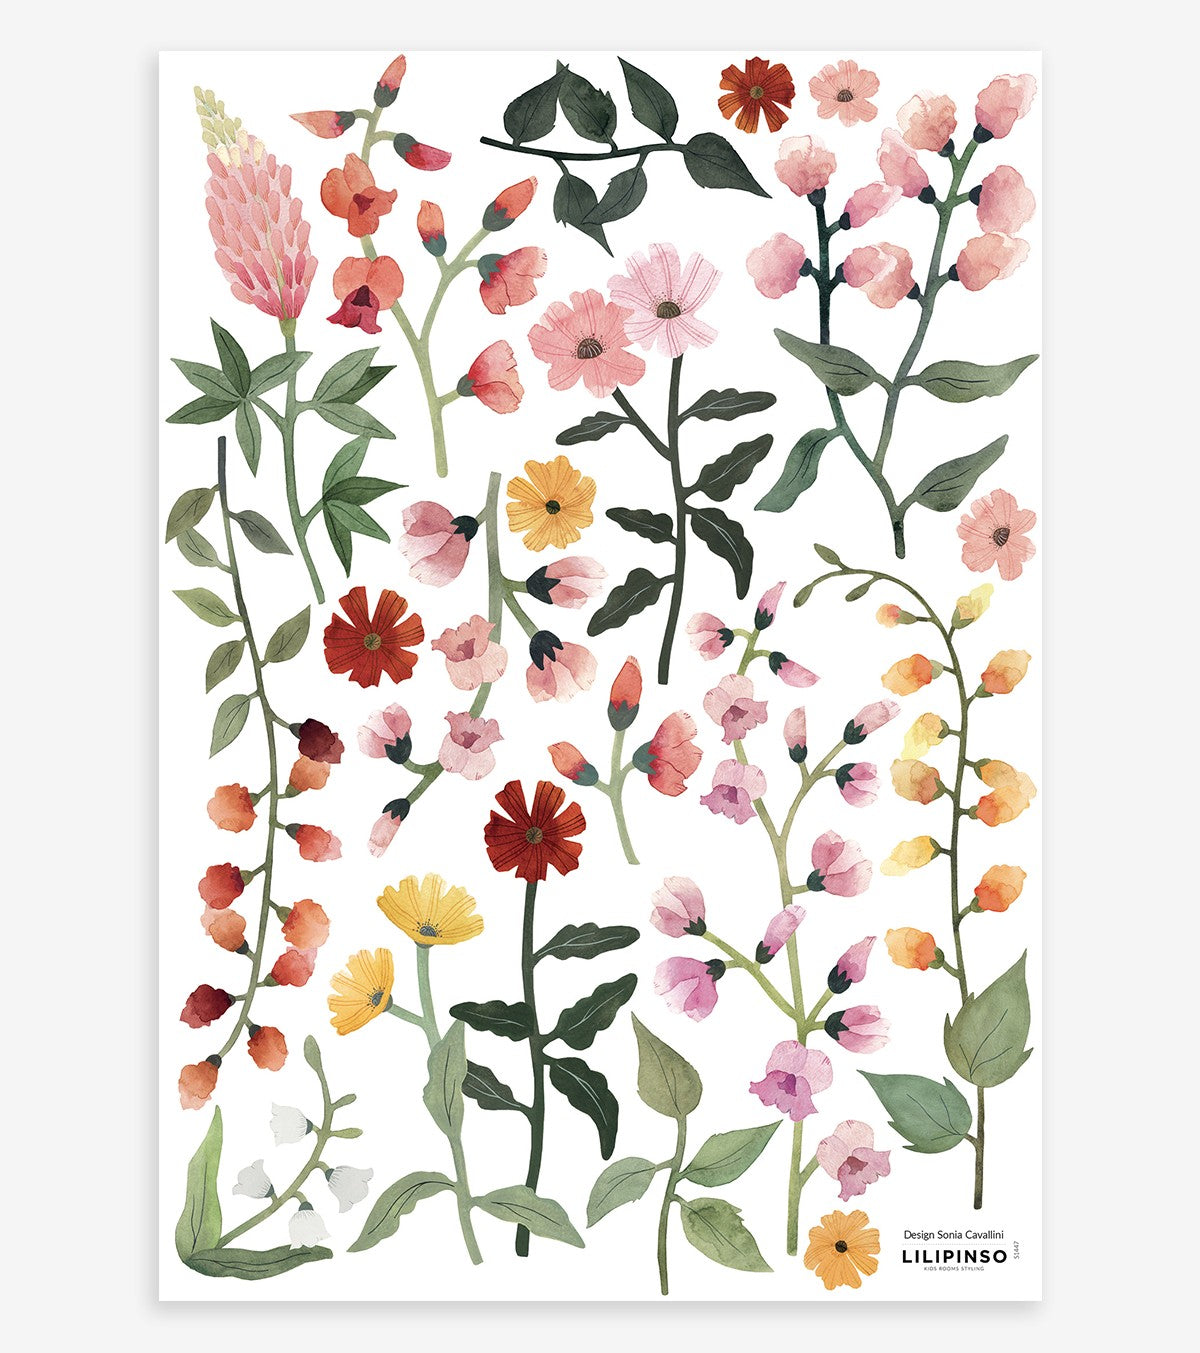 QUEYRAN - Seinätarrat - Kauniita kukkia